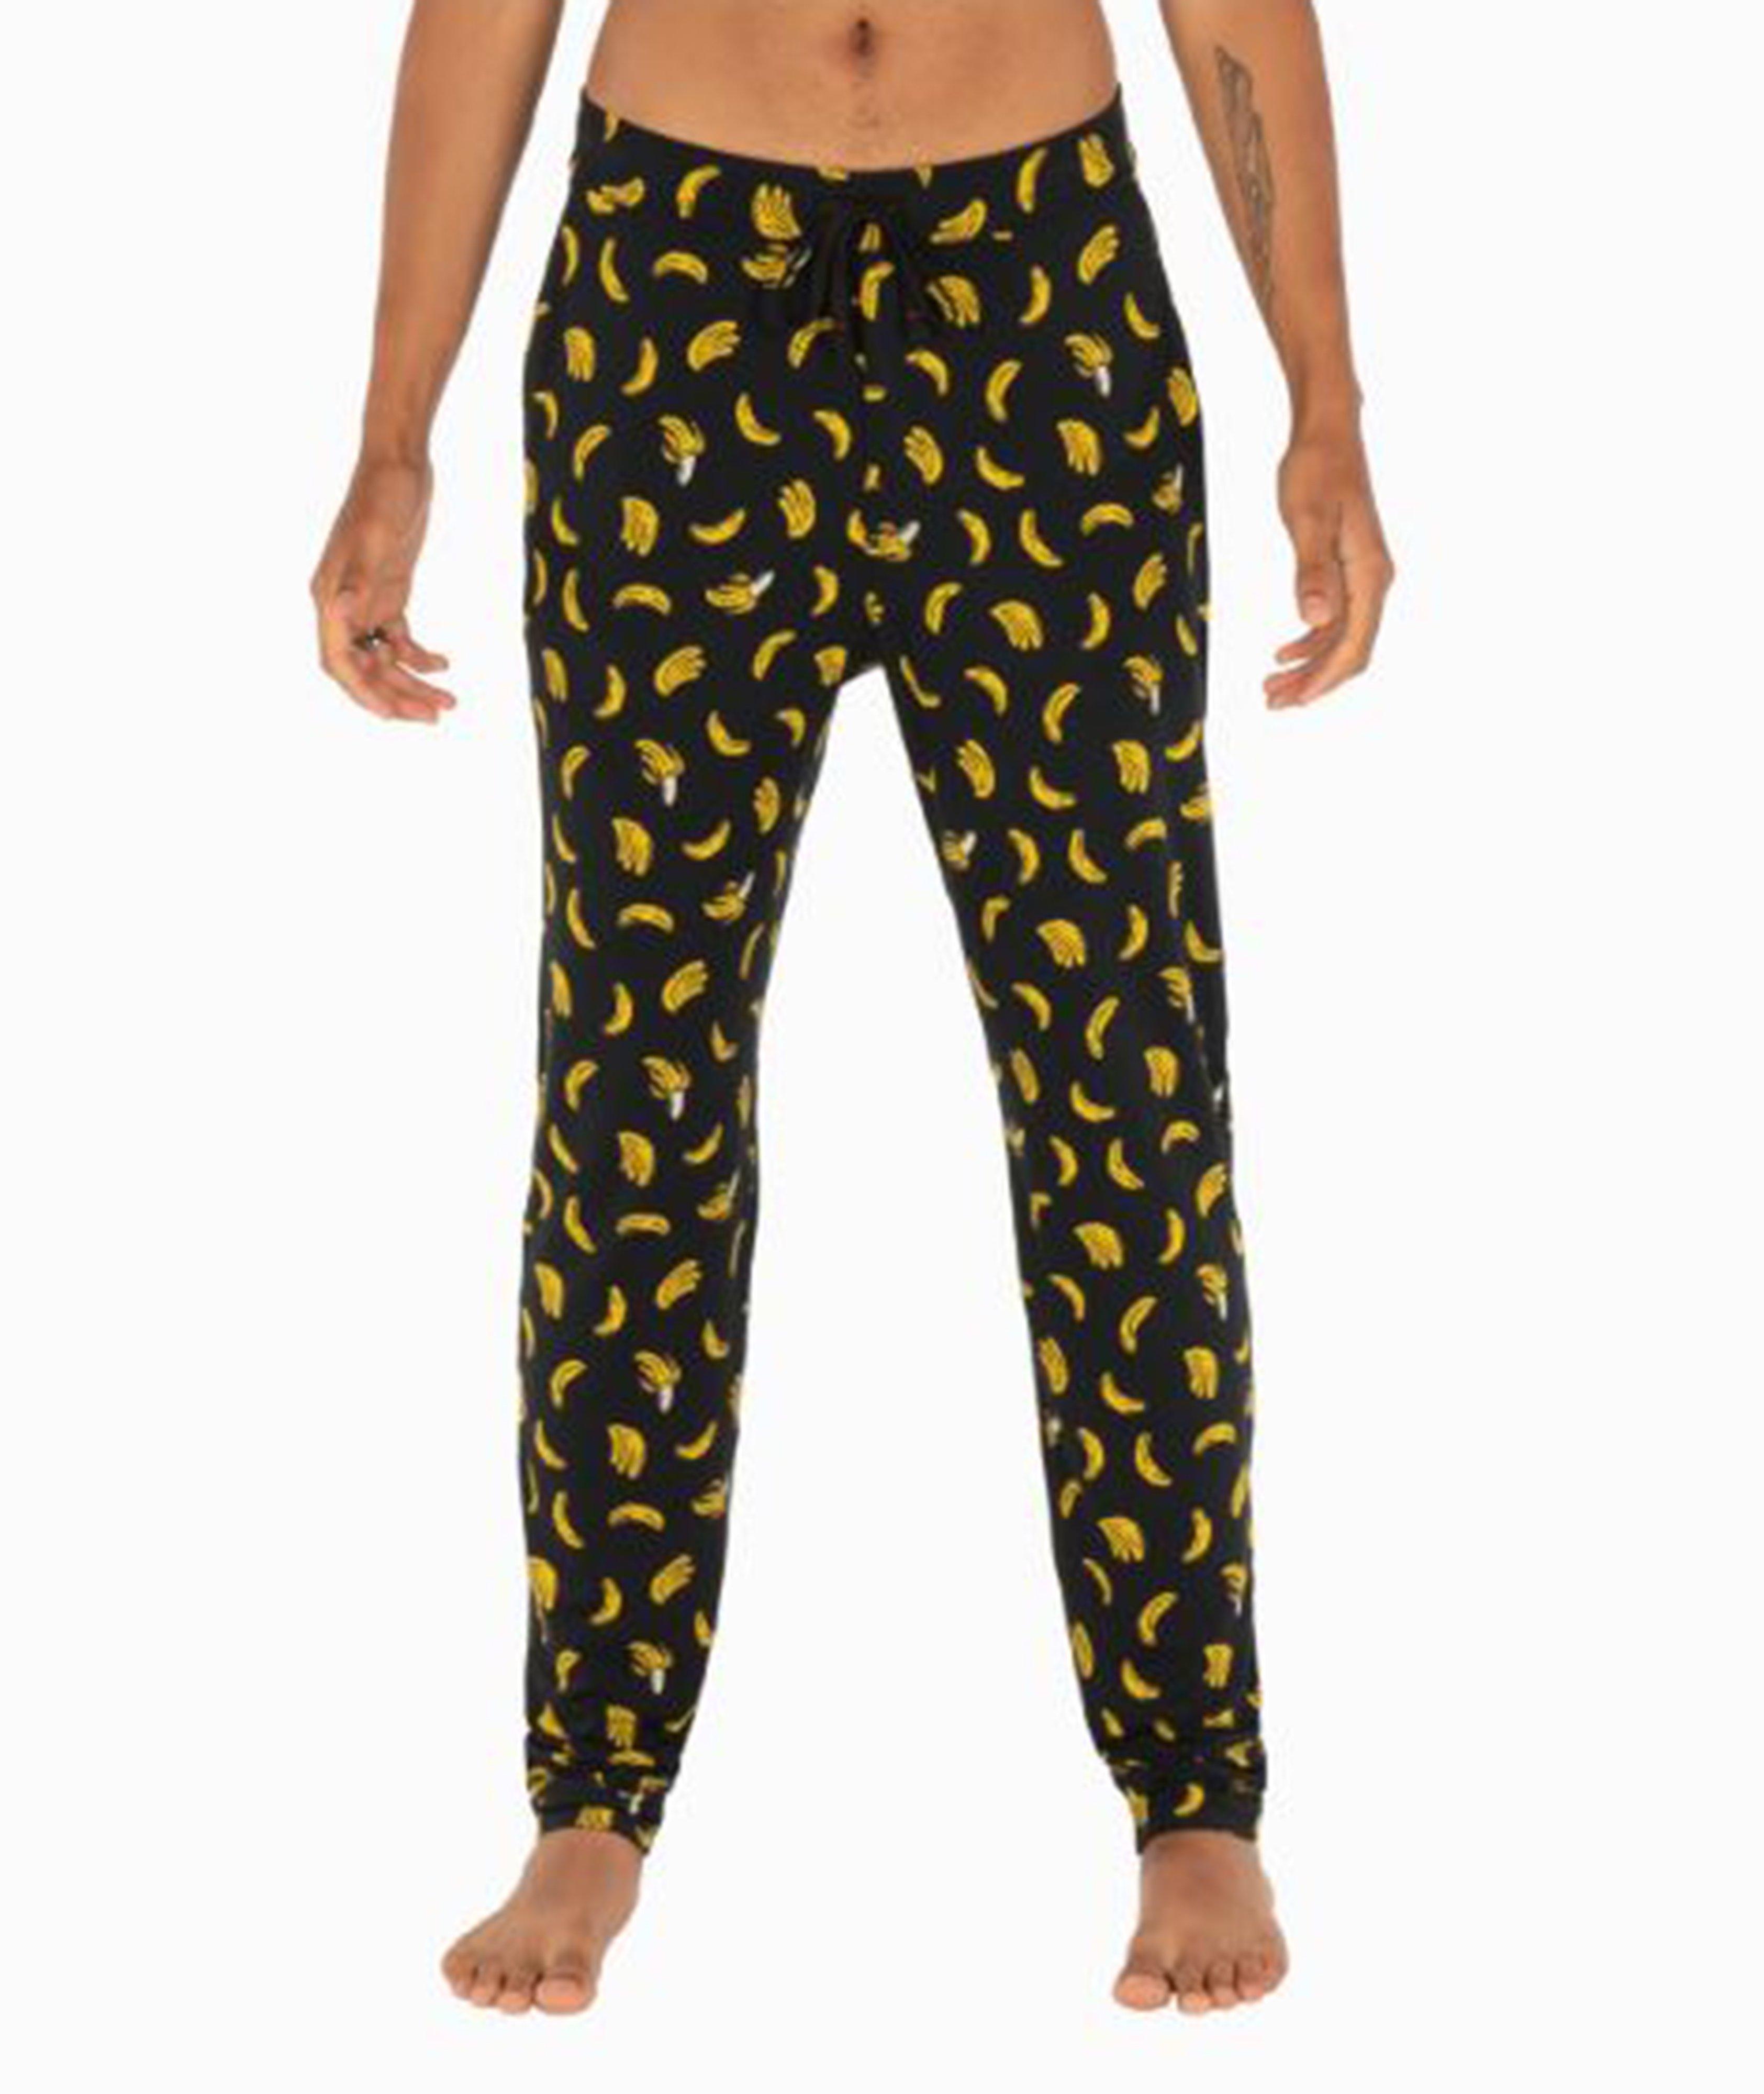 Snooze Banana Stretch-Modal Pants image 0